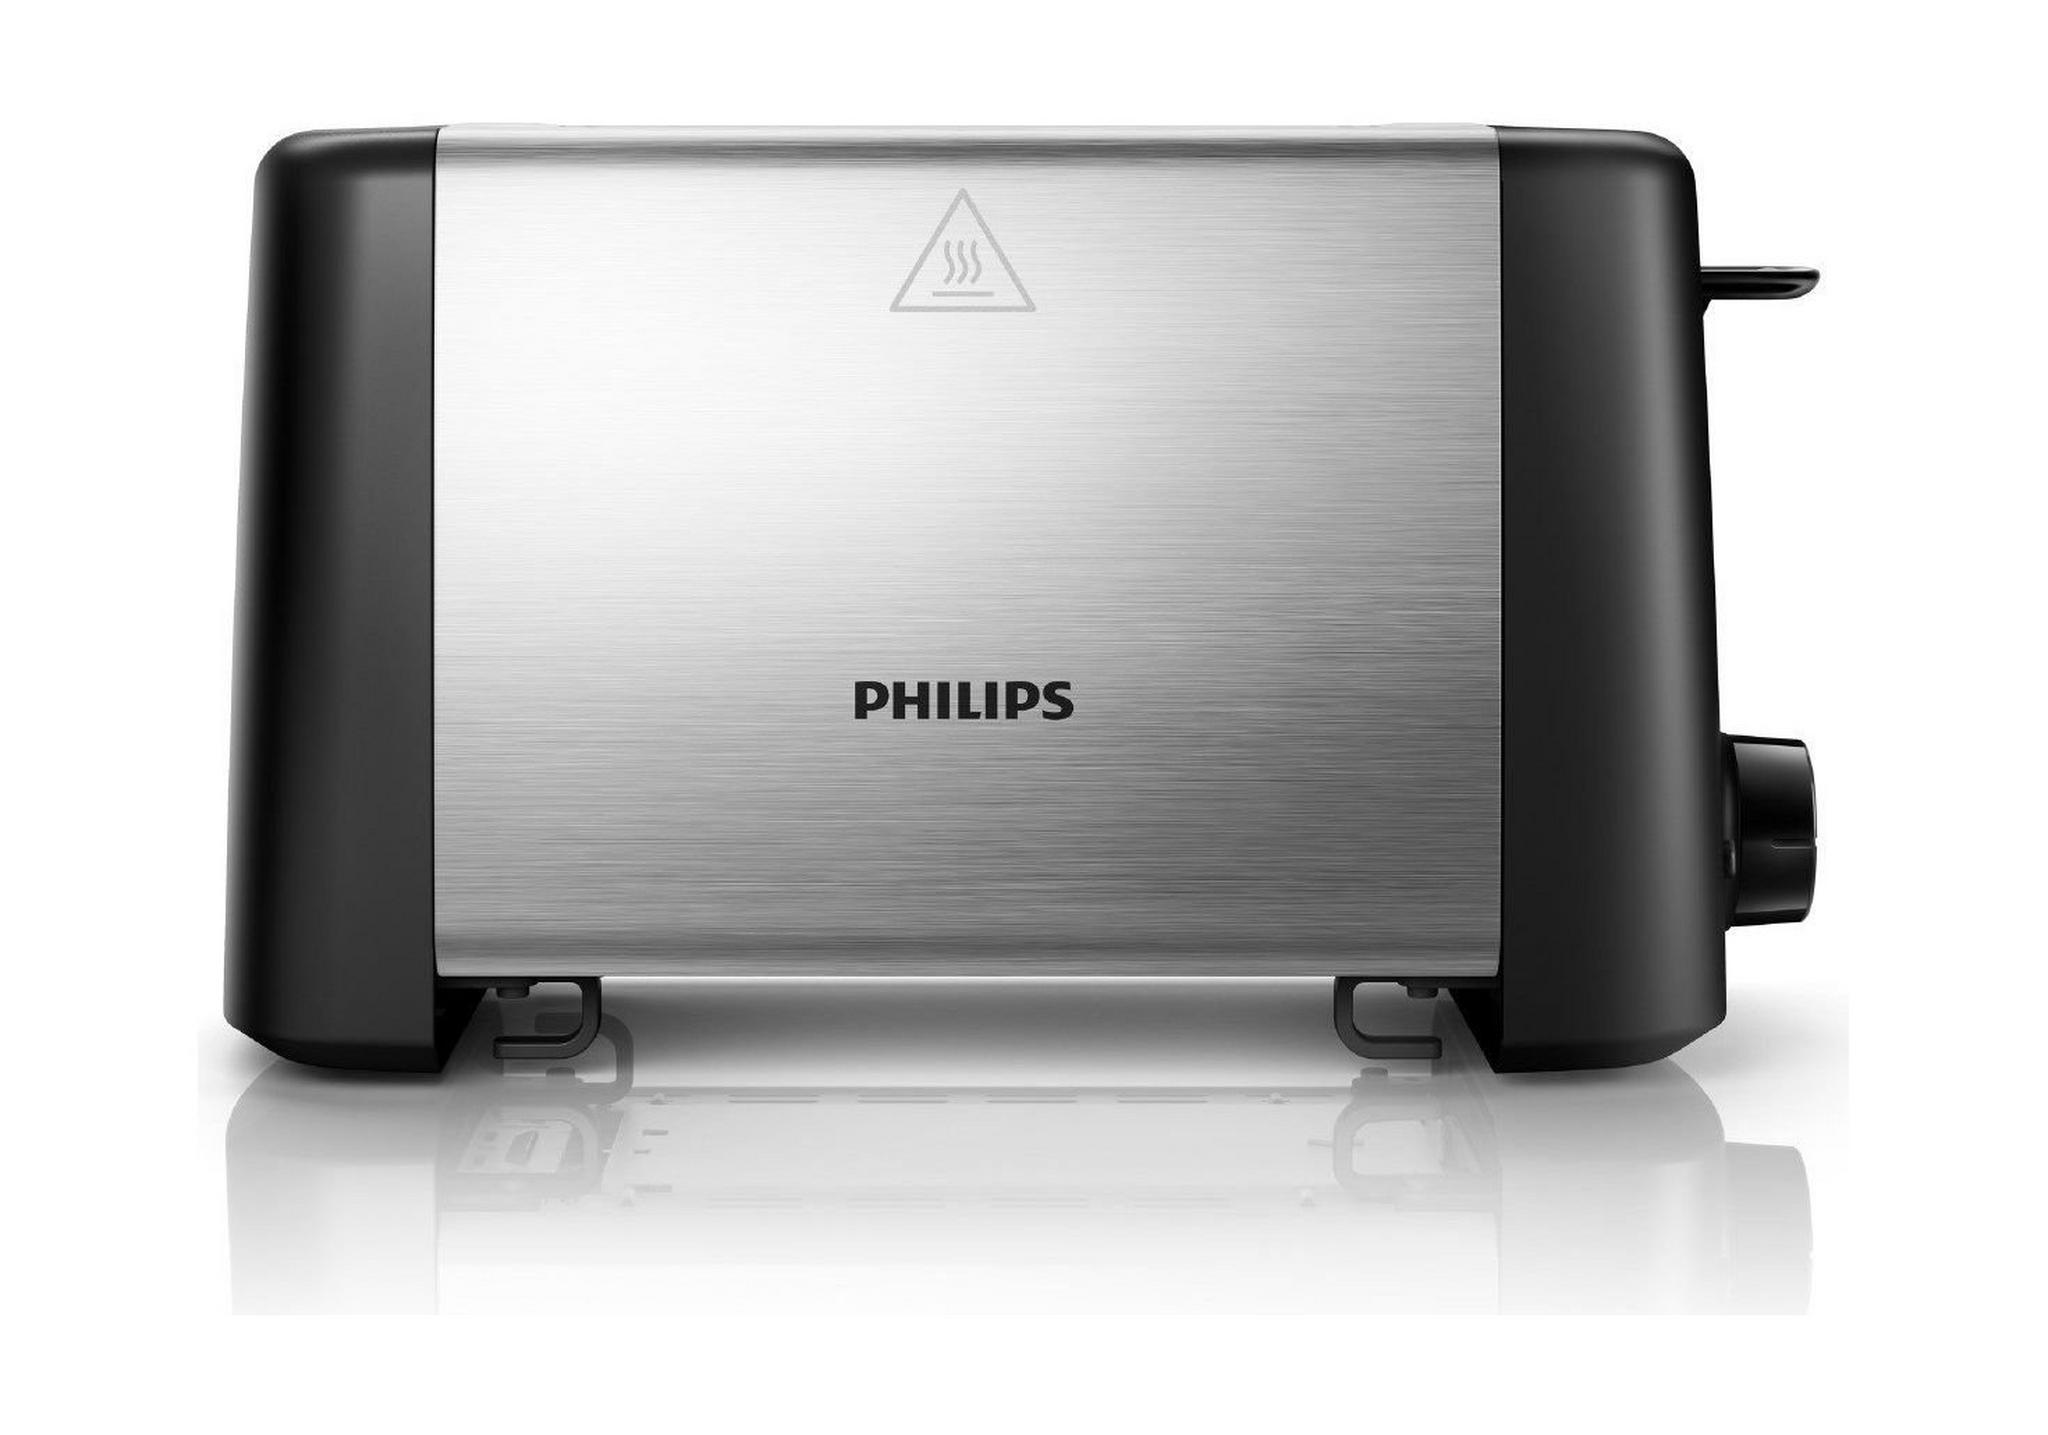 Philips 2-Slot Bread Toaster (HD4825/91) - Black